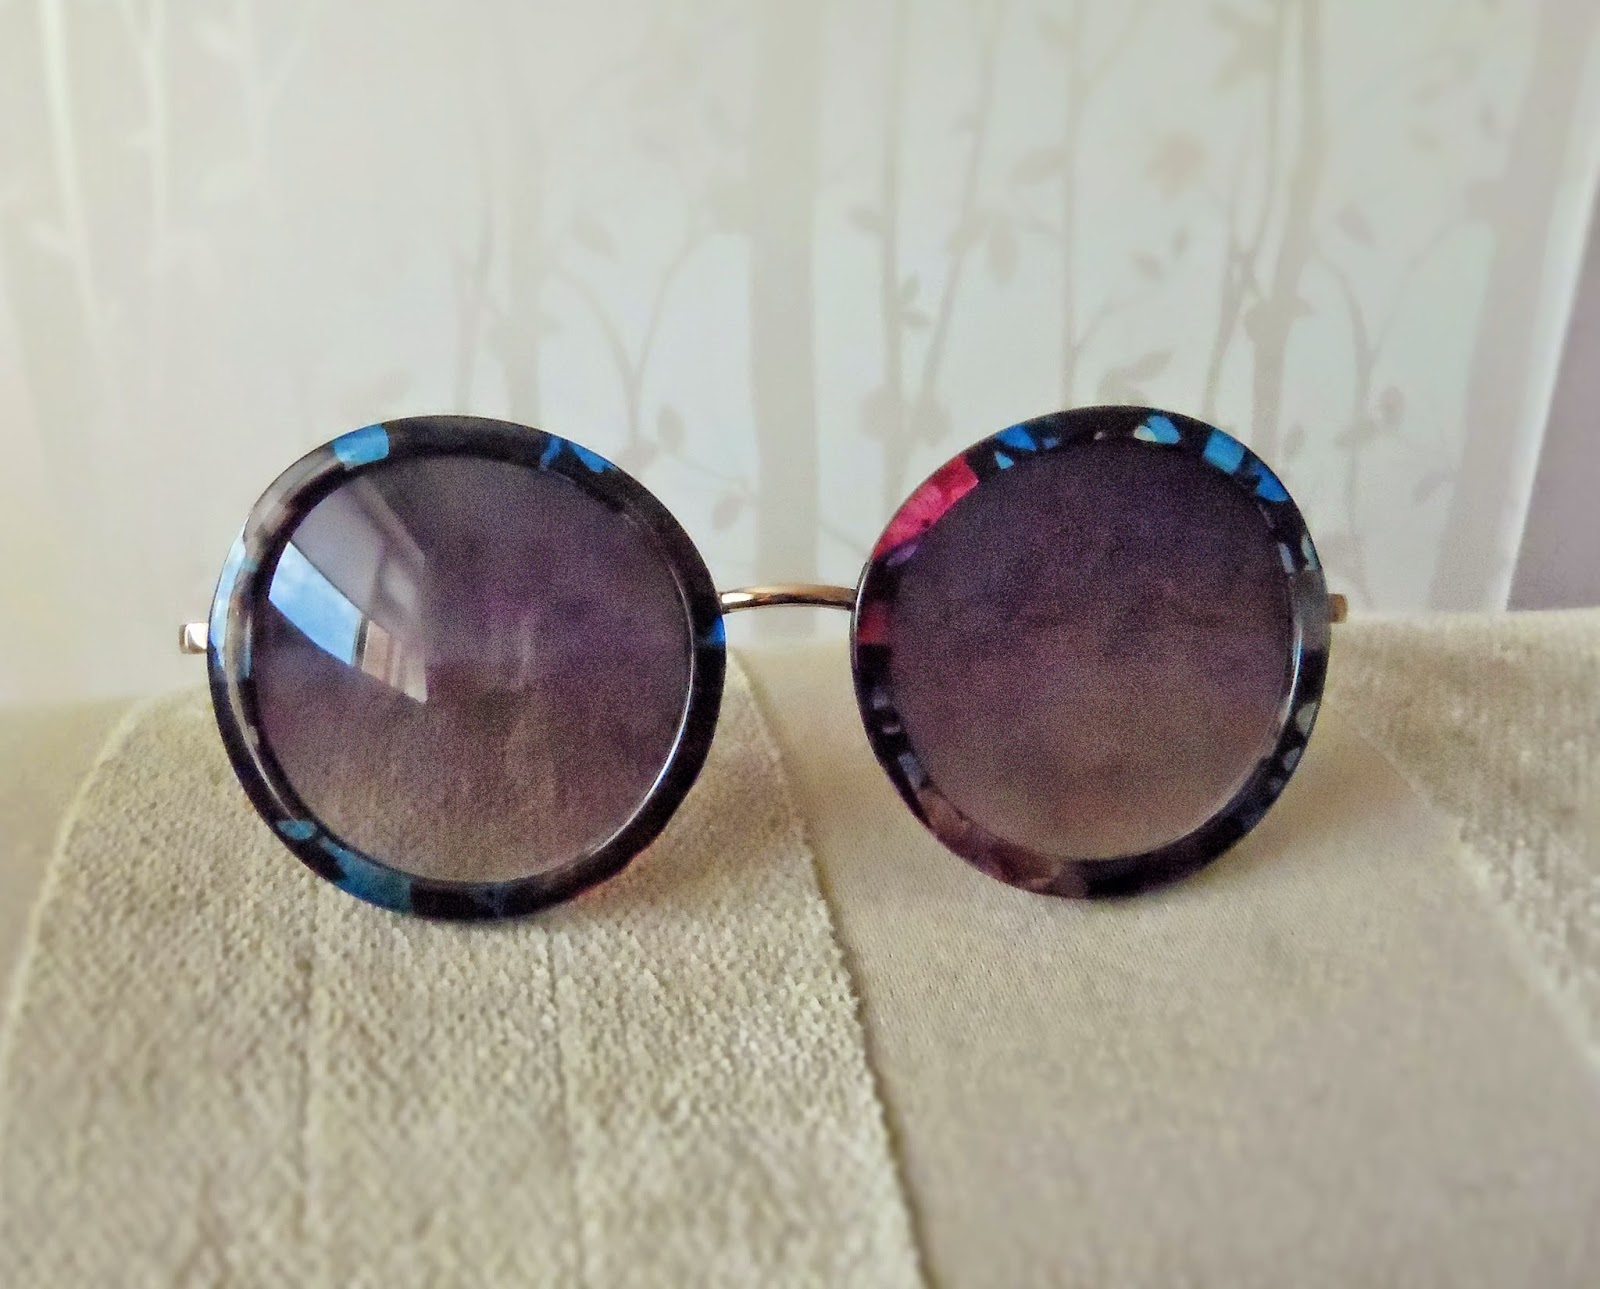 Penneys Primark Sunglasses